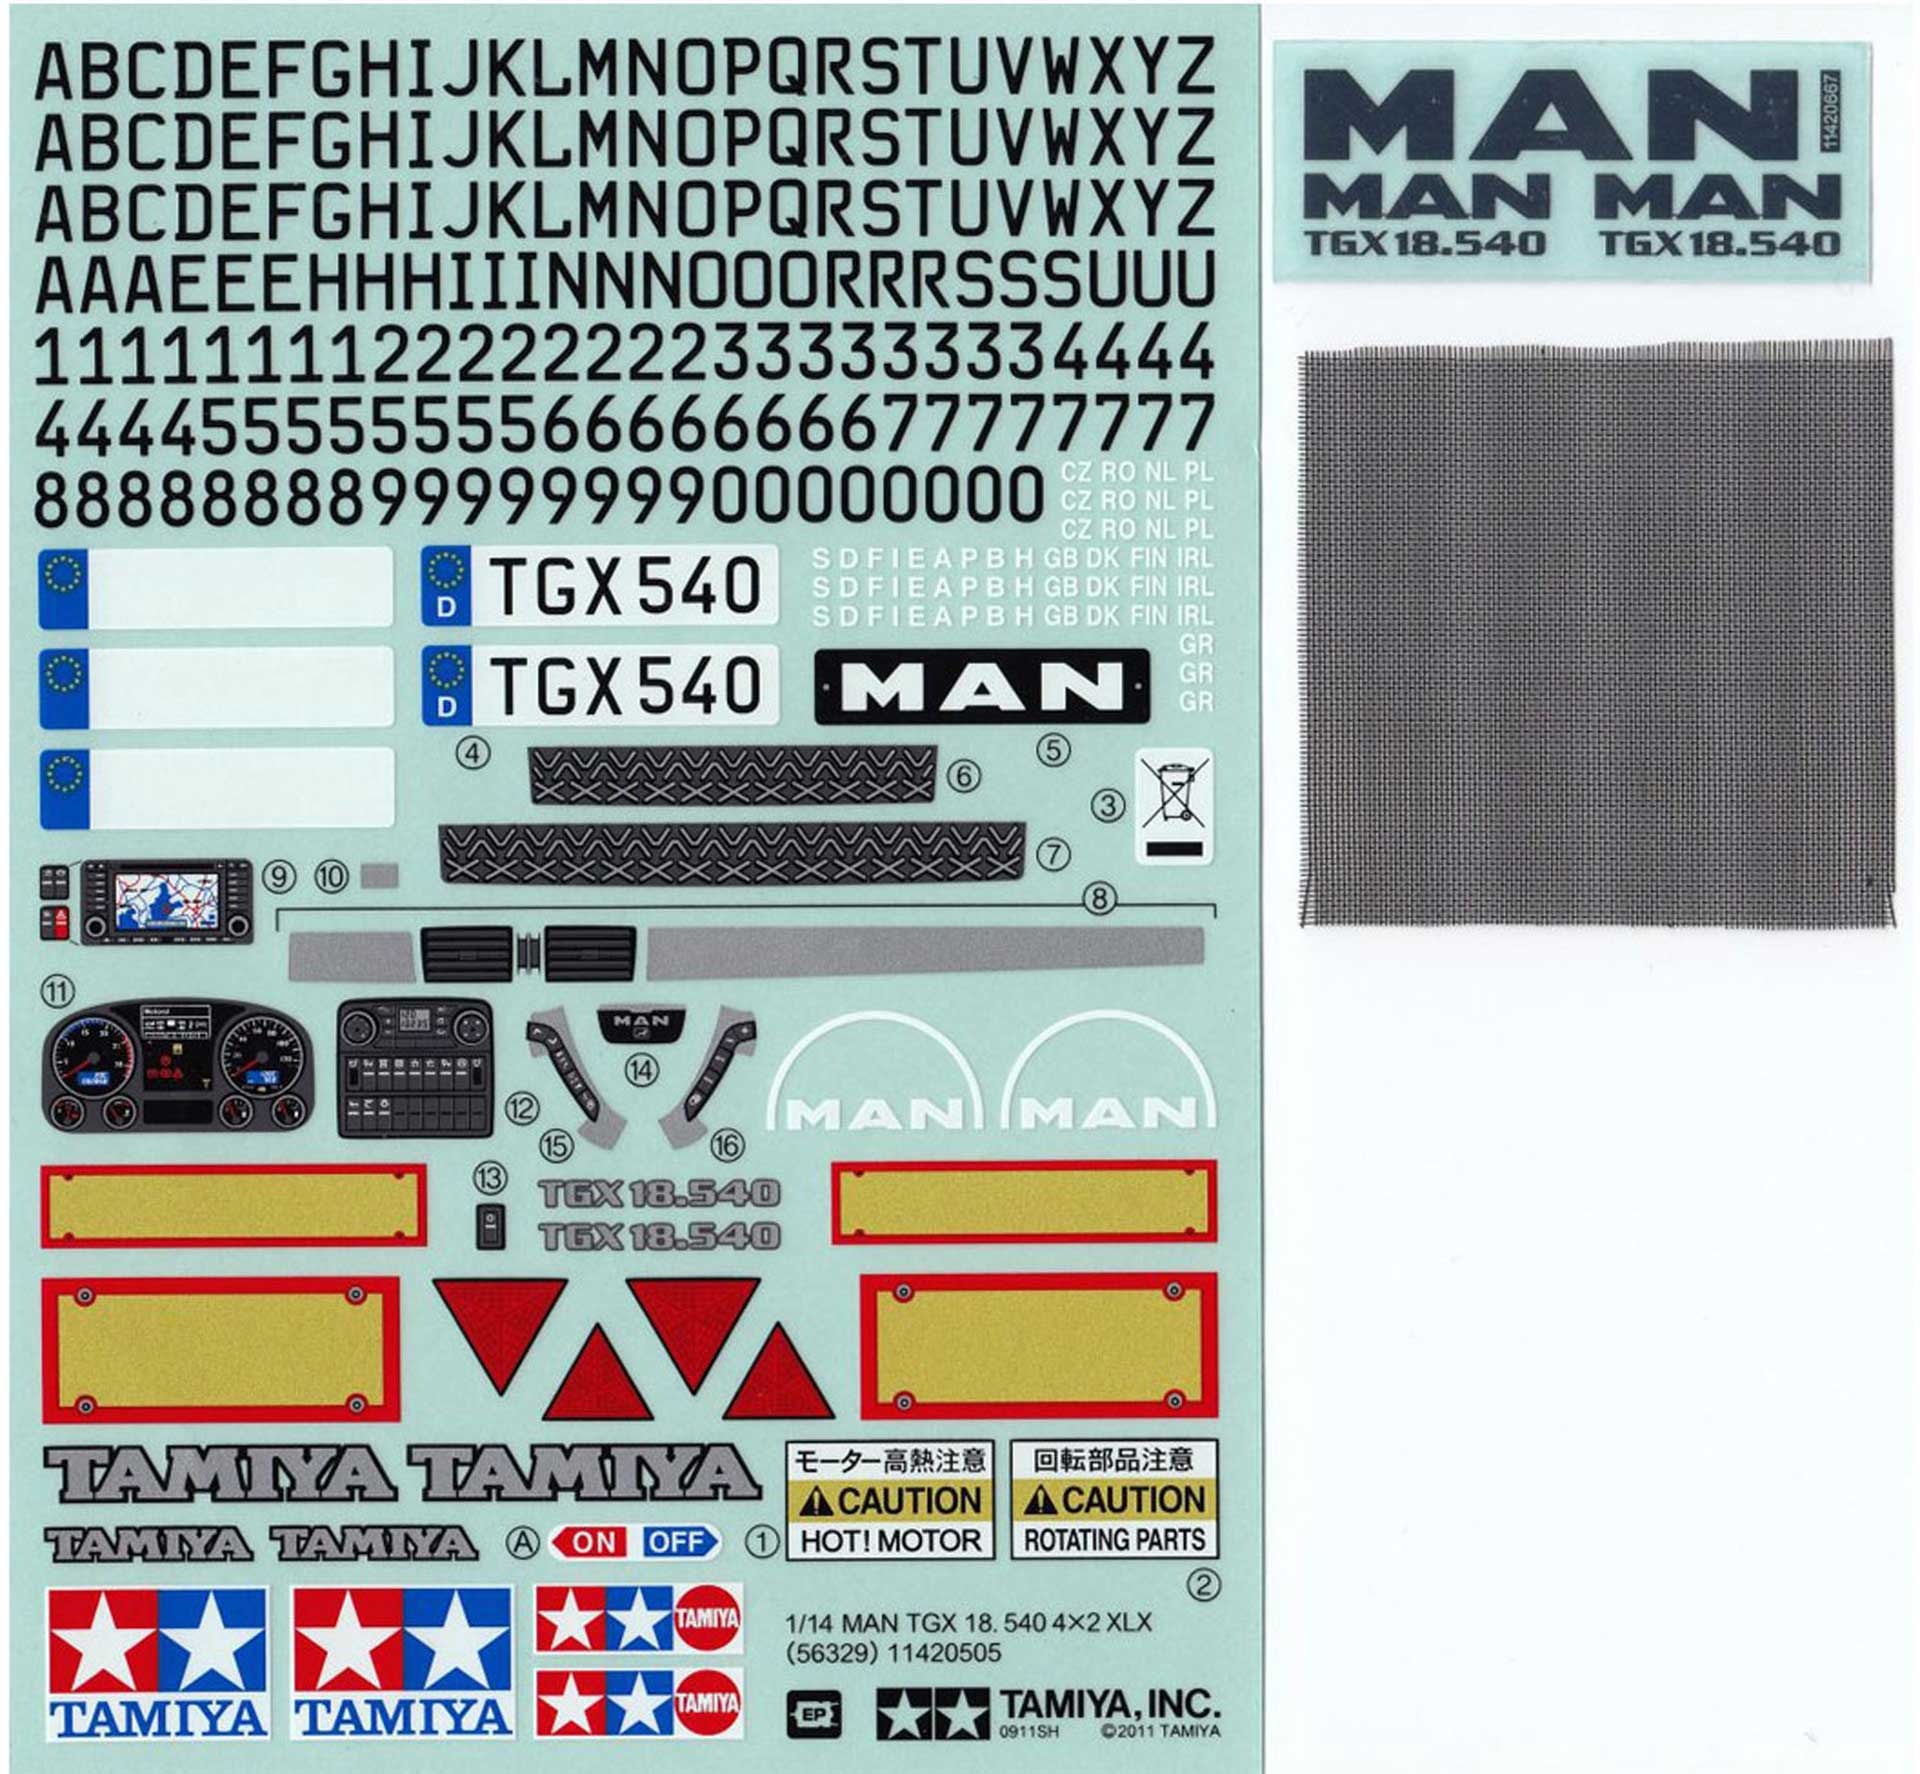 TAMIYA Sticker MAN TGX 18.540 Ver.II